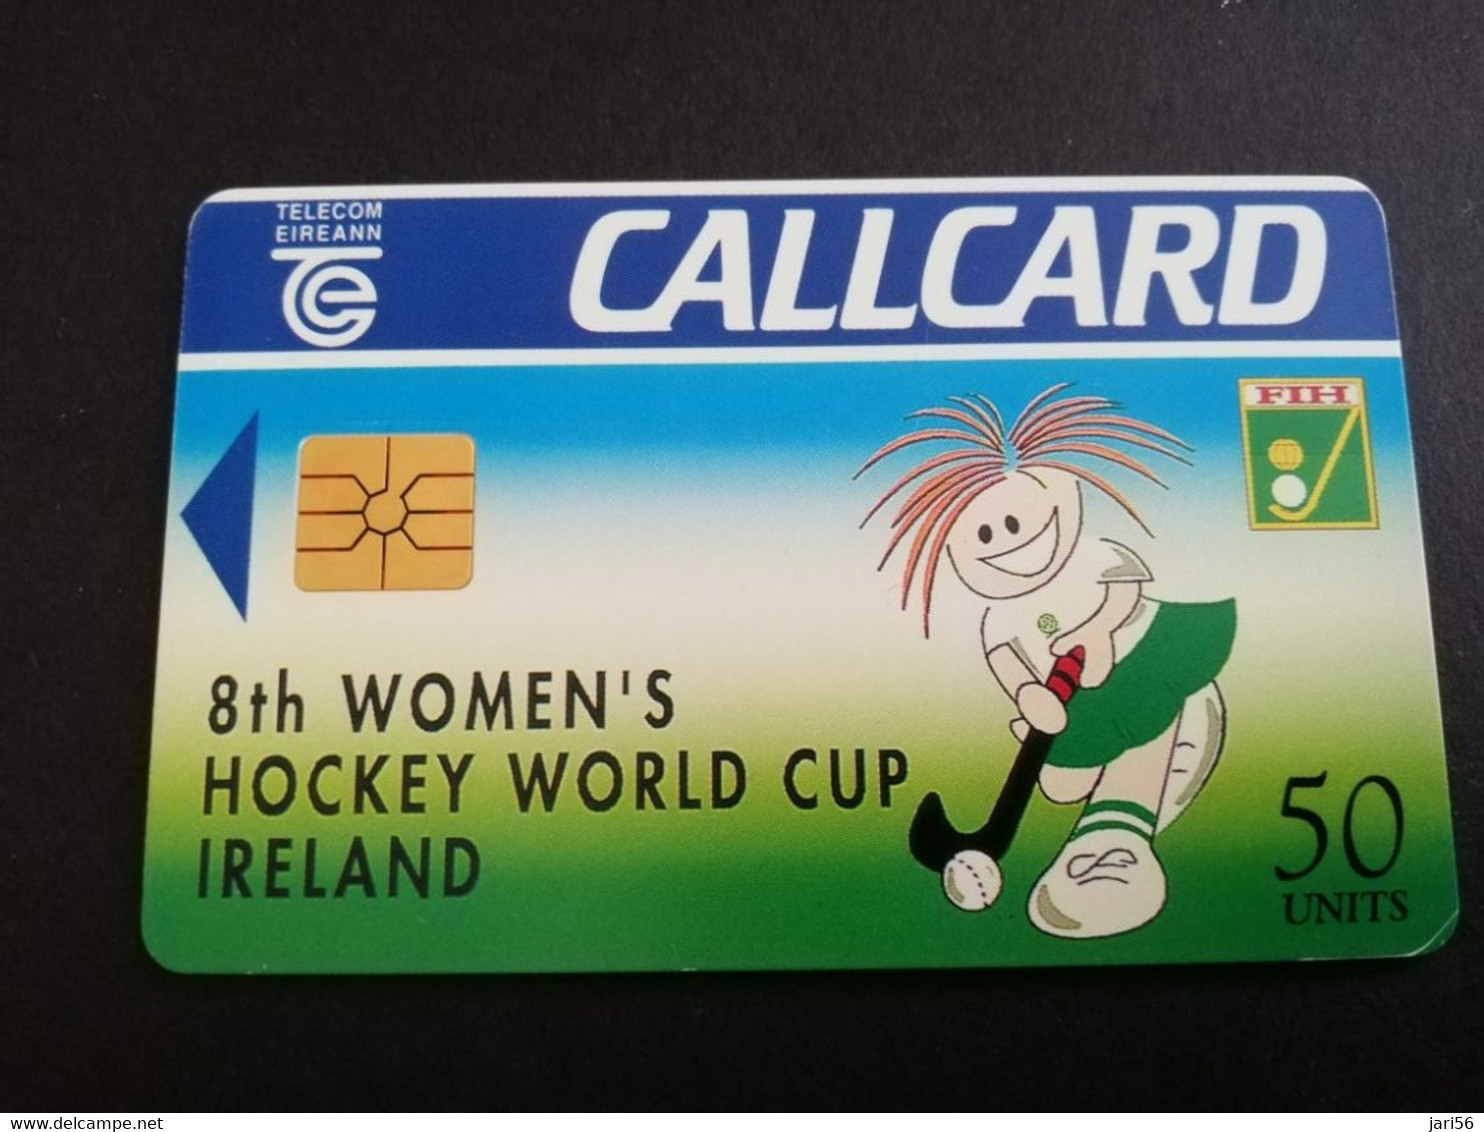 IRELAND /IERLANDE   CHIPCARD  50  UNITS  8TH WOMENS HOCKEY WORLD CUP IRELAND           CHIP   ** 5267** - Irlanda